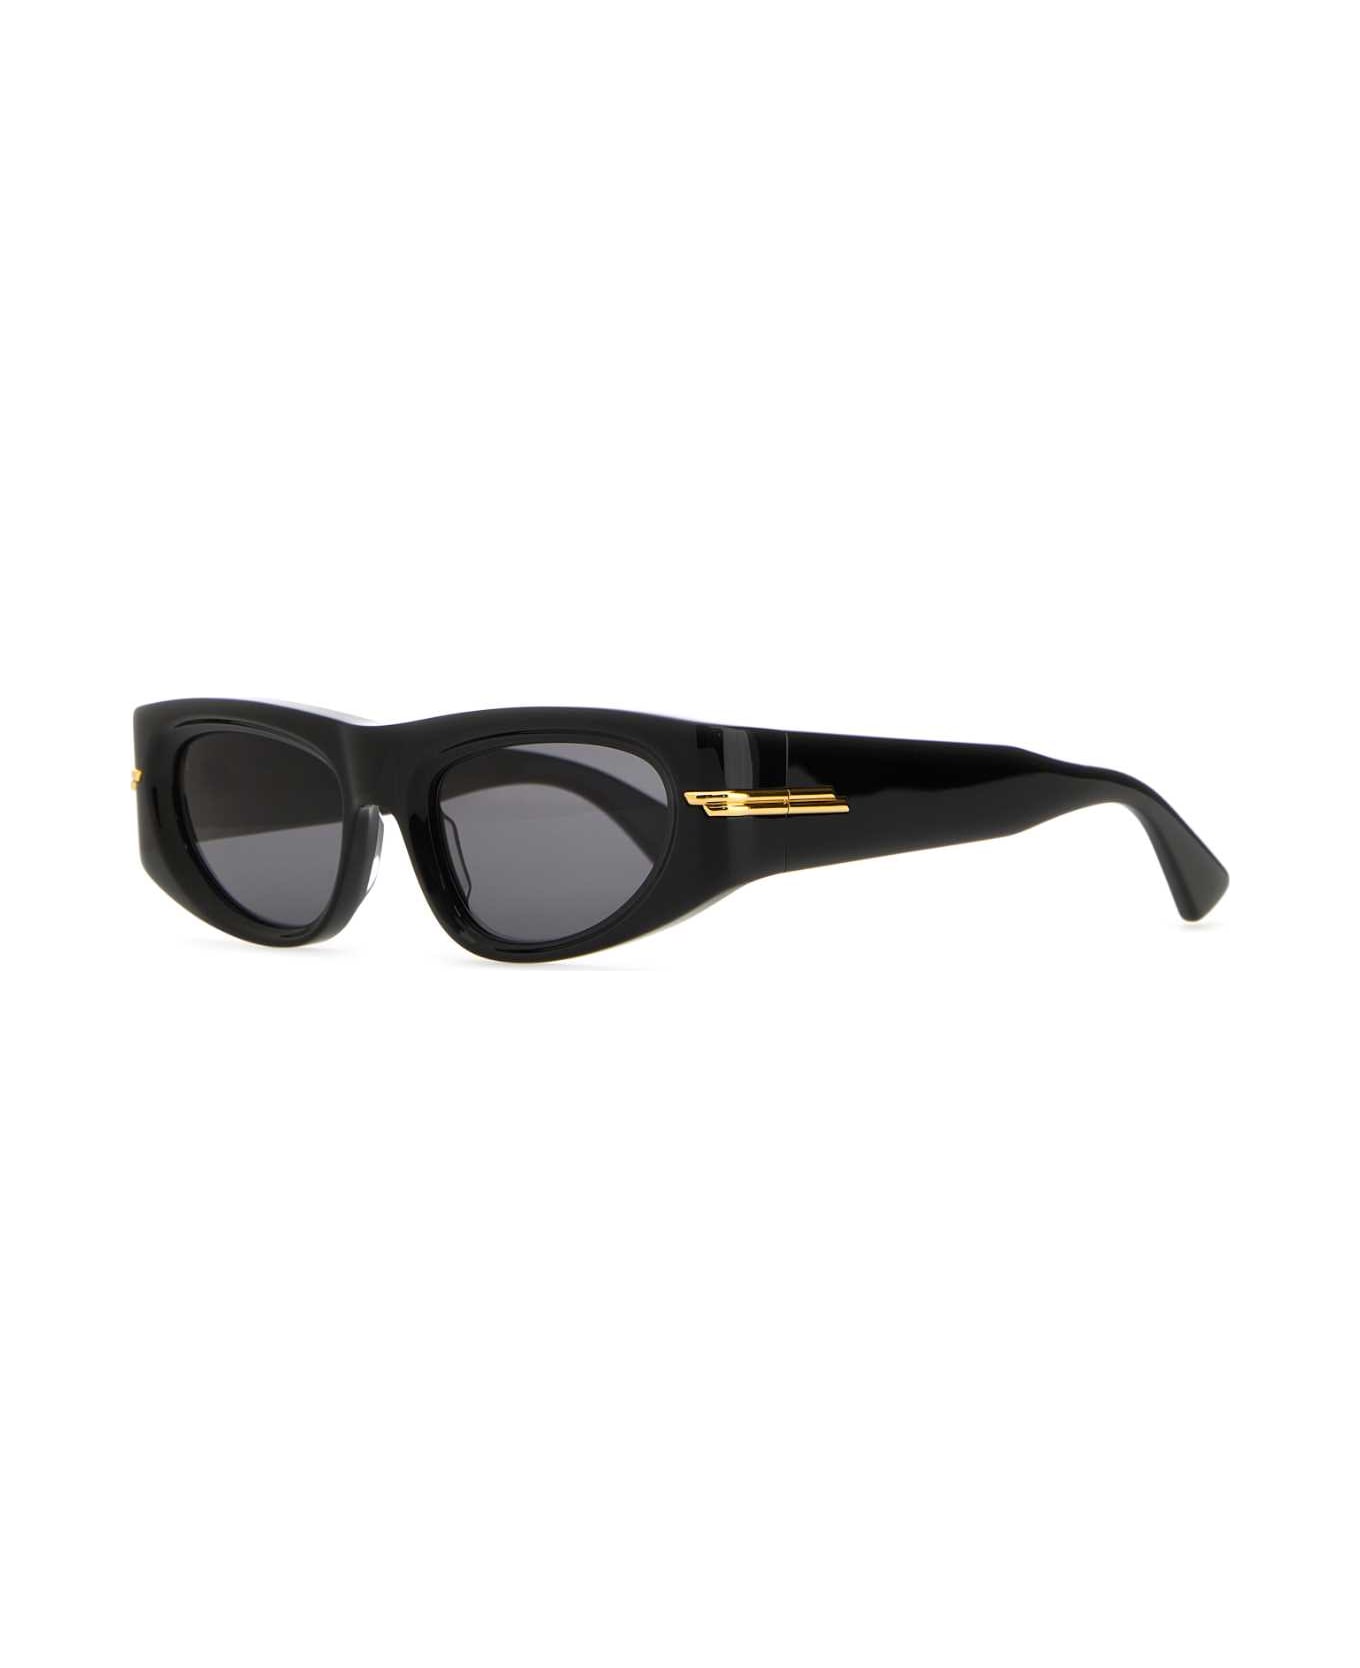 Bottega Veneta Black Acetate Sunglasses - 1049 サングラス